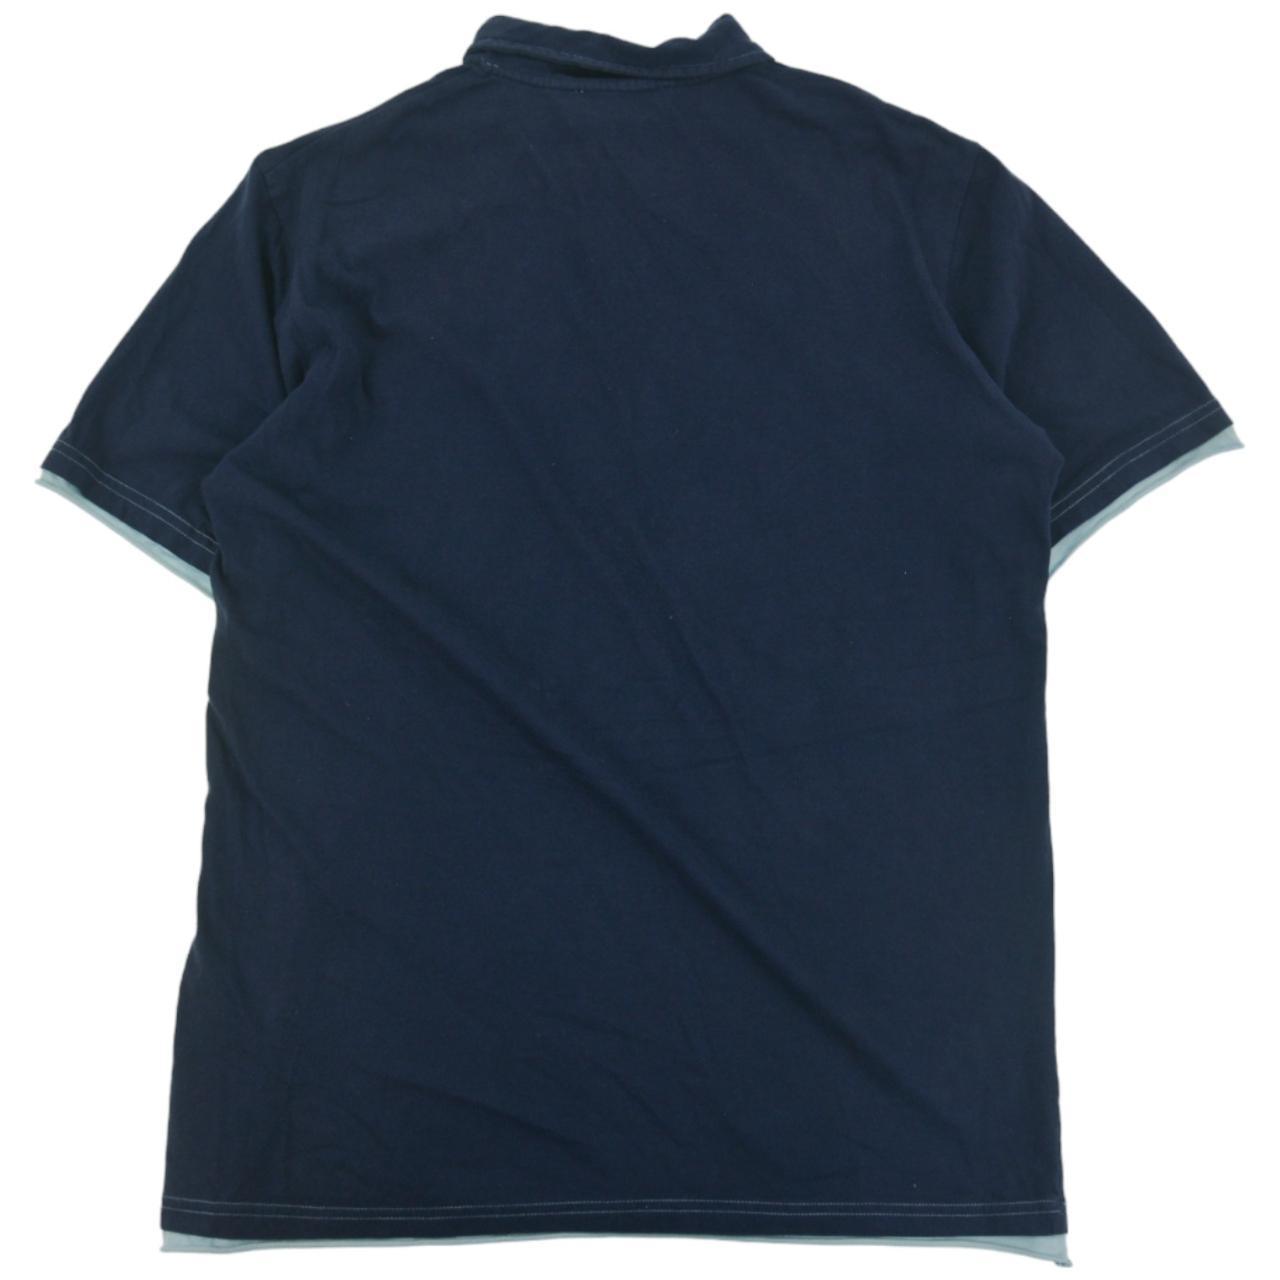 Vintage YSL Yves Saint Laurent Monogram Polo Shirt Size S - Known Source